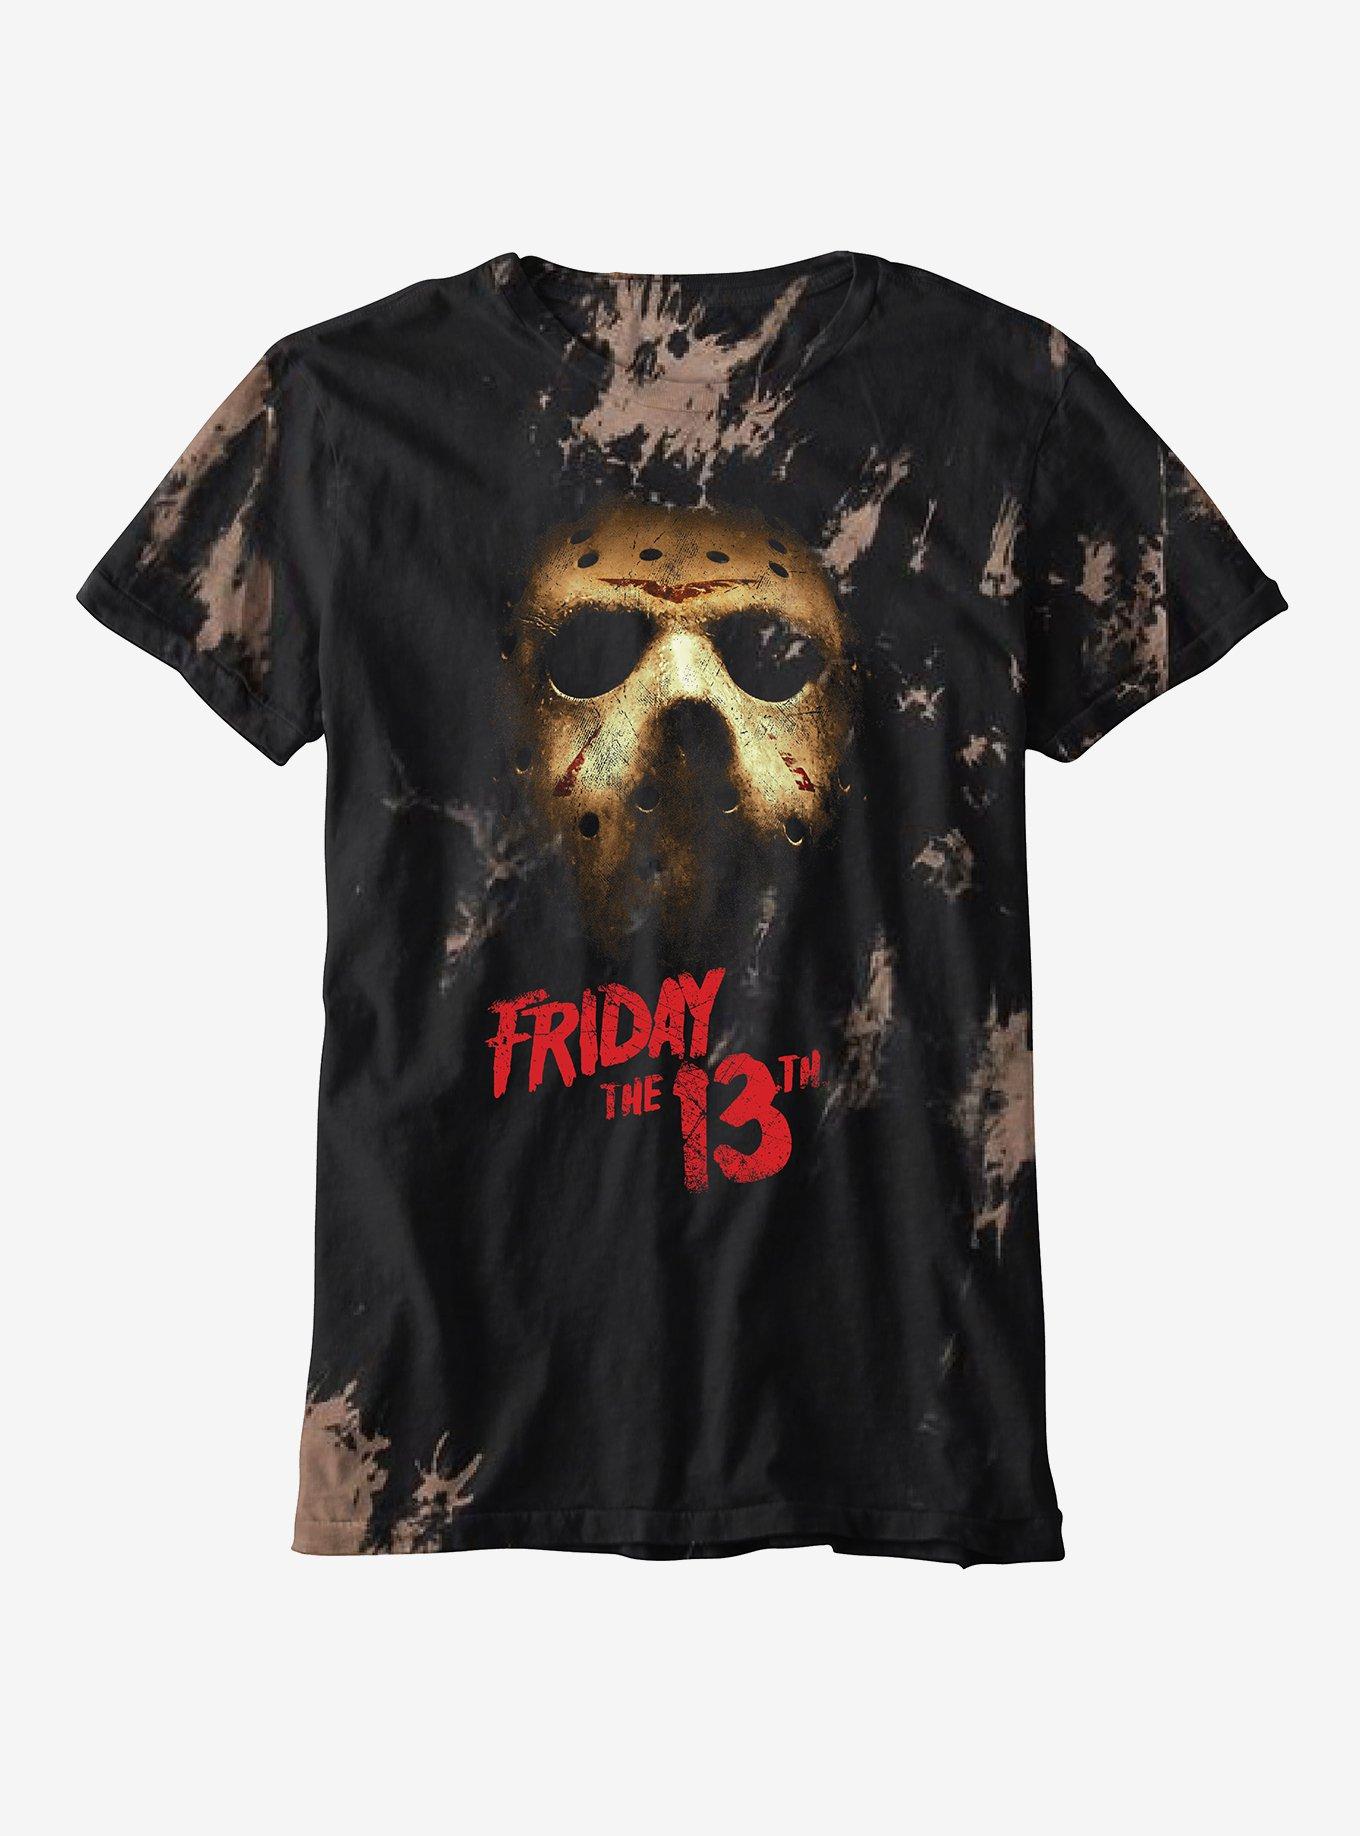 Friday The 13th Mask Tie-Dye Boyfriend Fit Girls T-Shirt